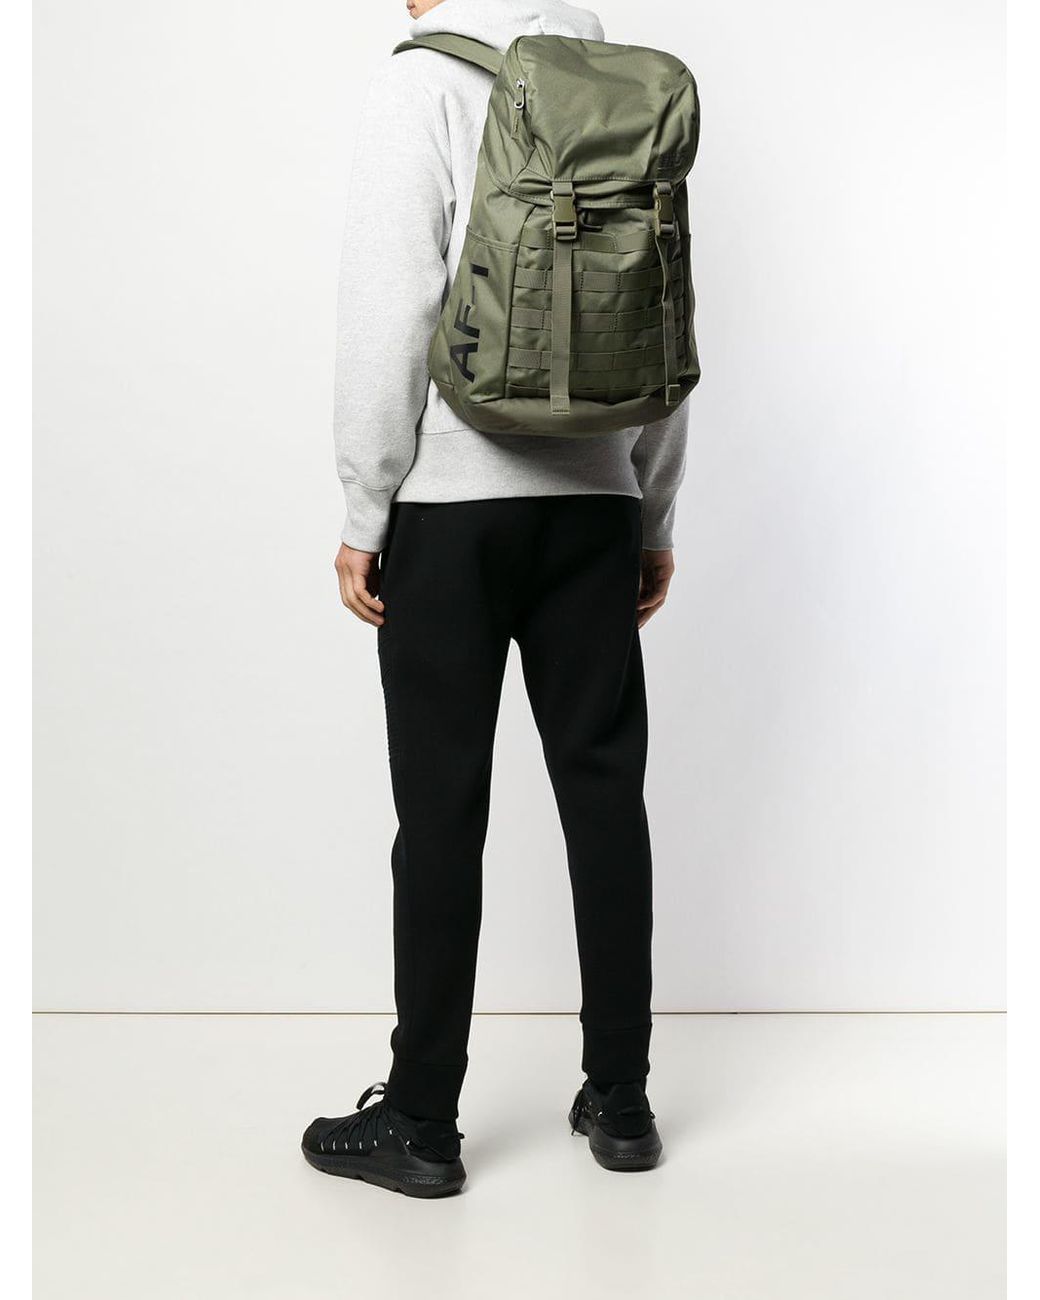 Nike Af1 Backpack in Green for | Lyst